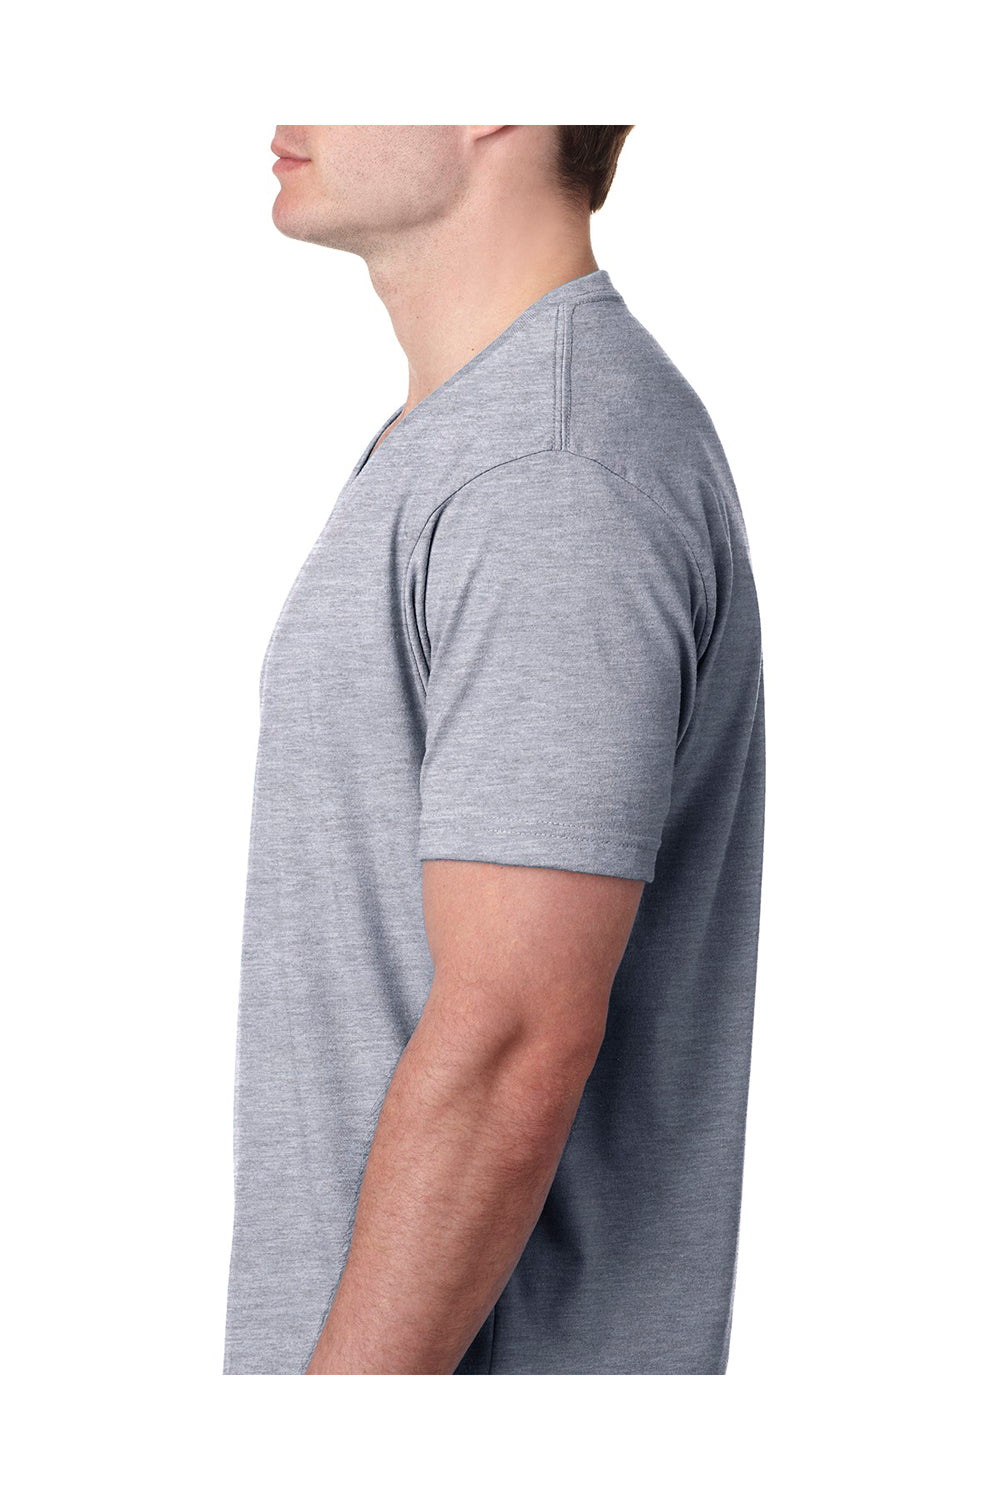 Next Level 6240 Mens CVC Jersey Short Sleeve V-Neck T-Shirt Heather Dark Grey Side